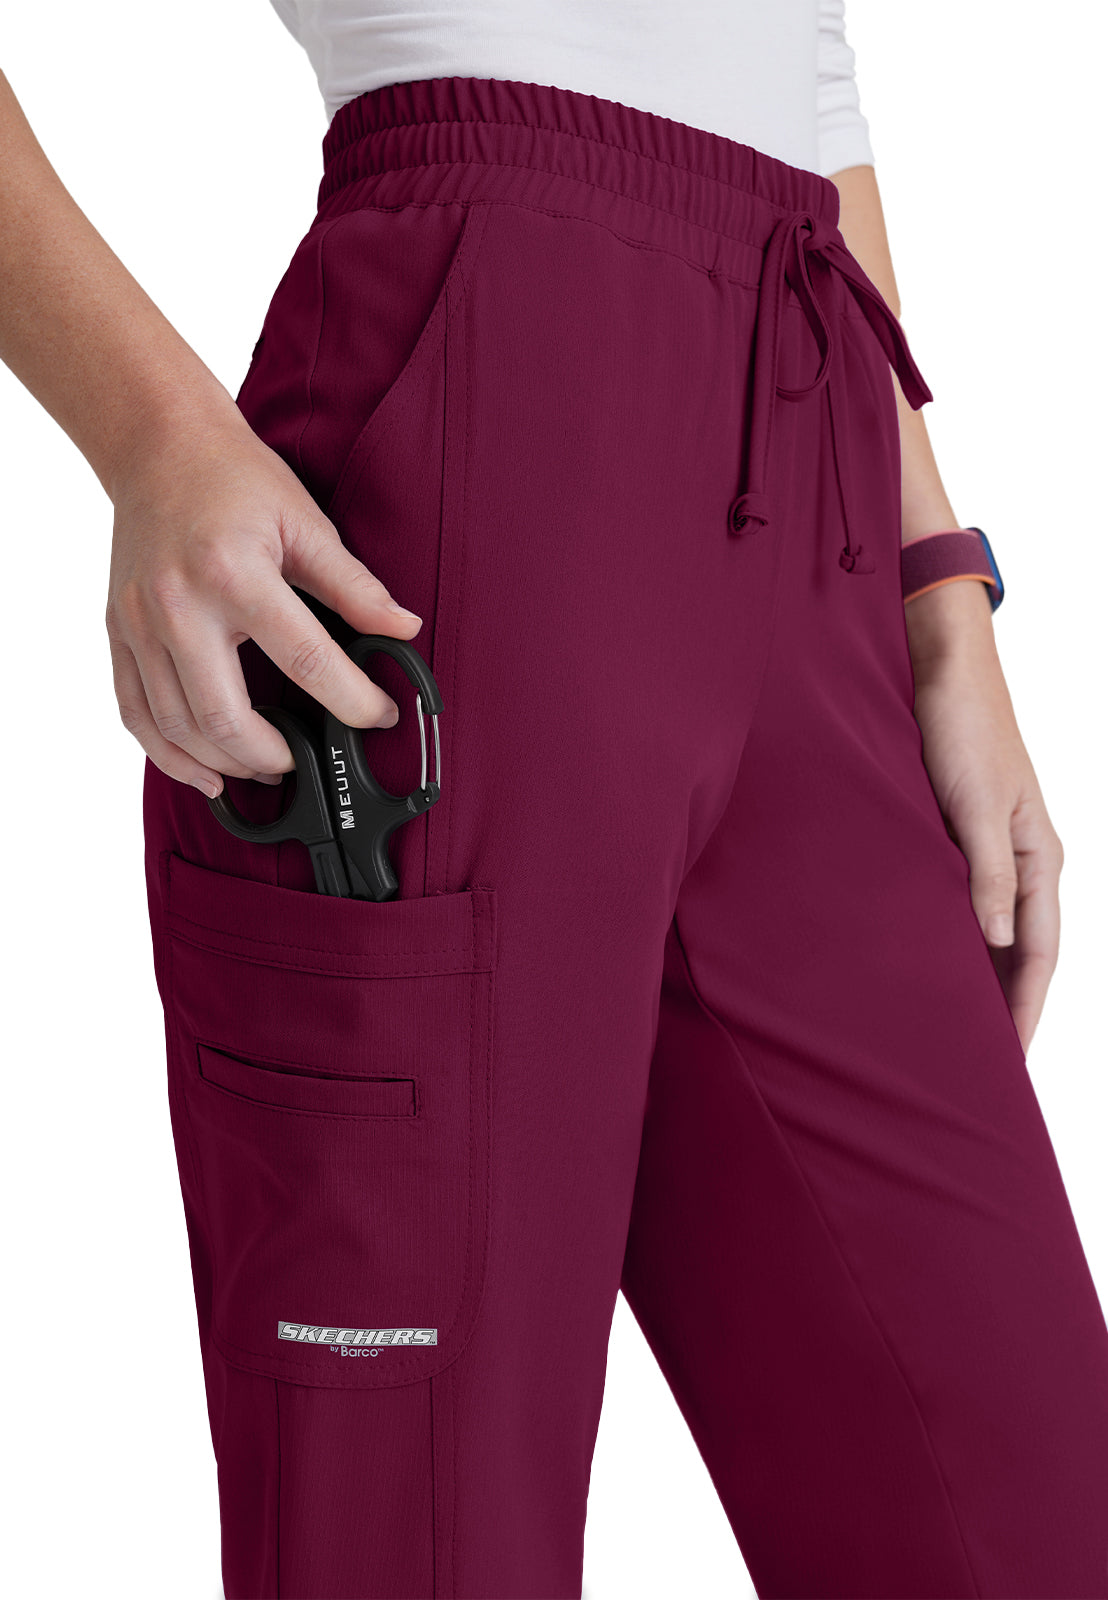 Women's 6 Pocket Elastic Waist Tapered Pant - SKP623 - Wine